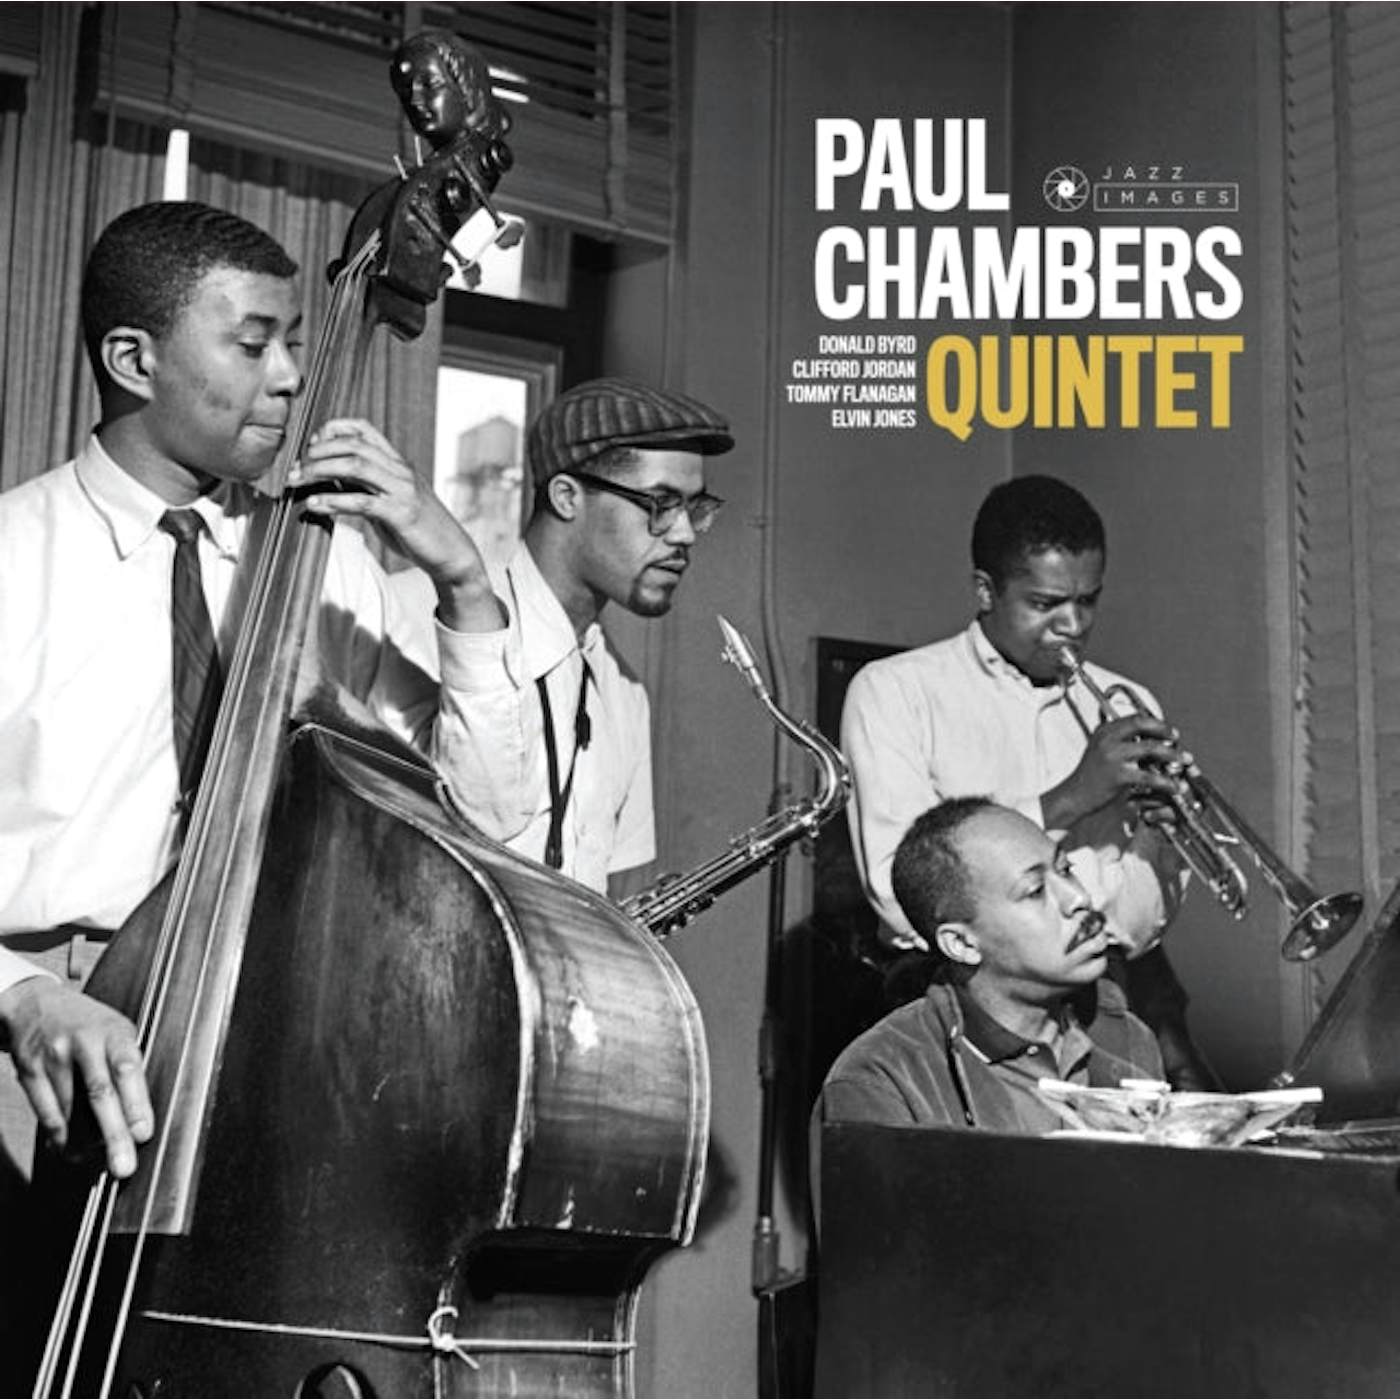 Paul Chambers Quintet LP Vinyl Record - Paul Chambers Quintet